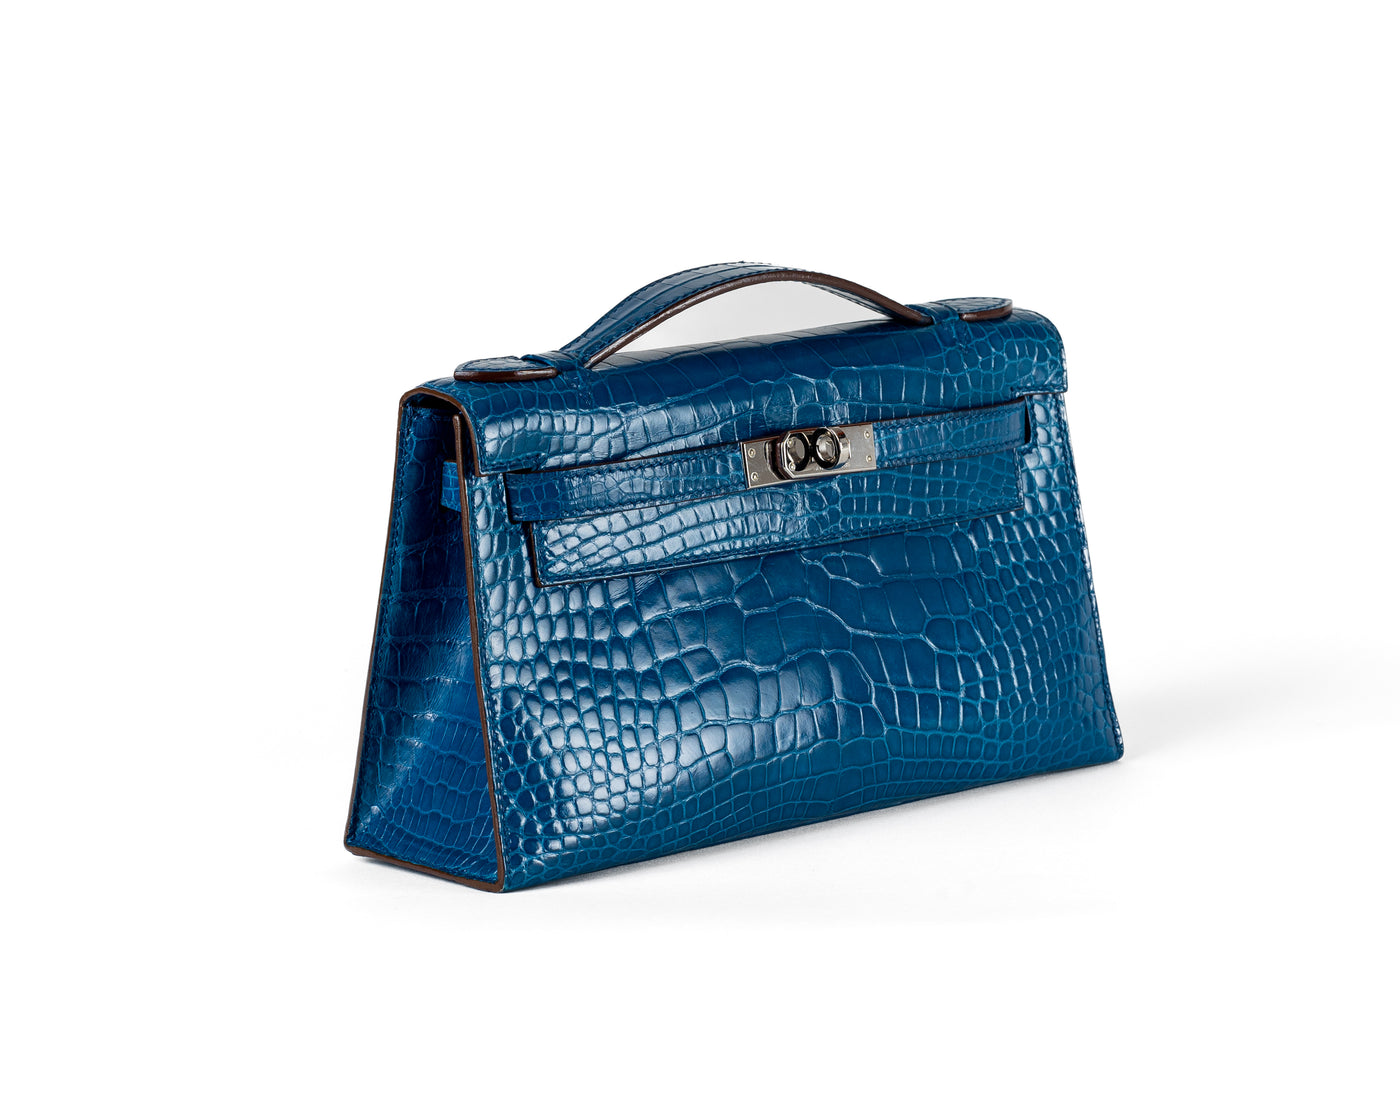 Indulge in ultimate luxury with the Hermès Blue Porosus Croc Kelly Pouchette, finished with sleek palladium hardware